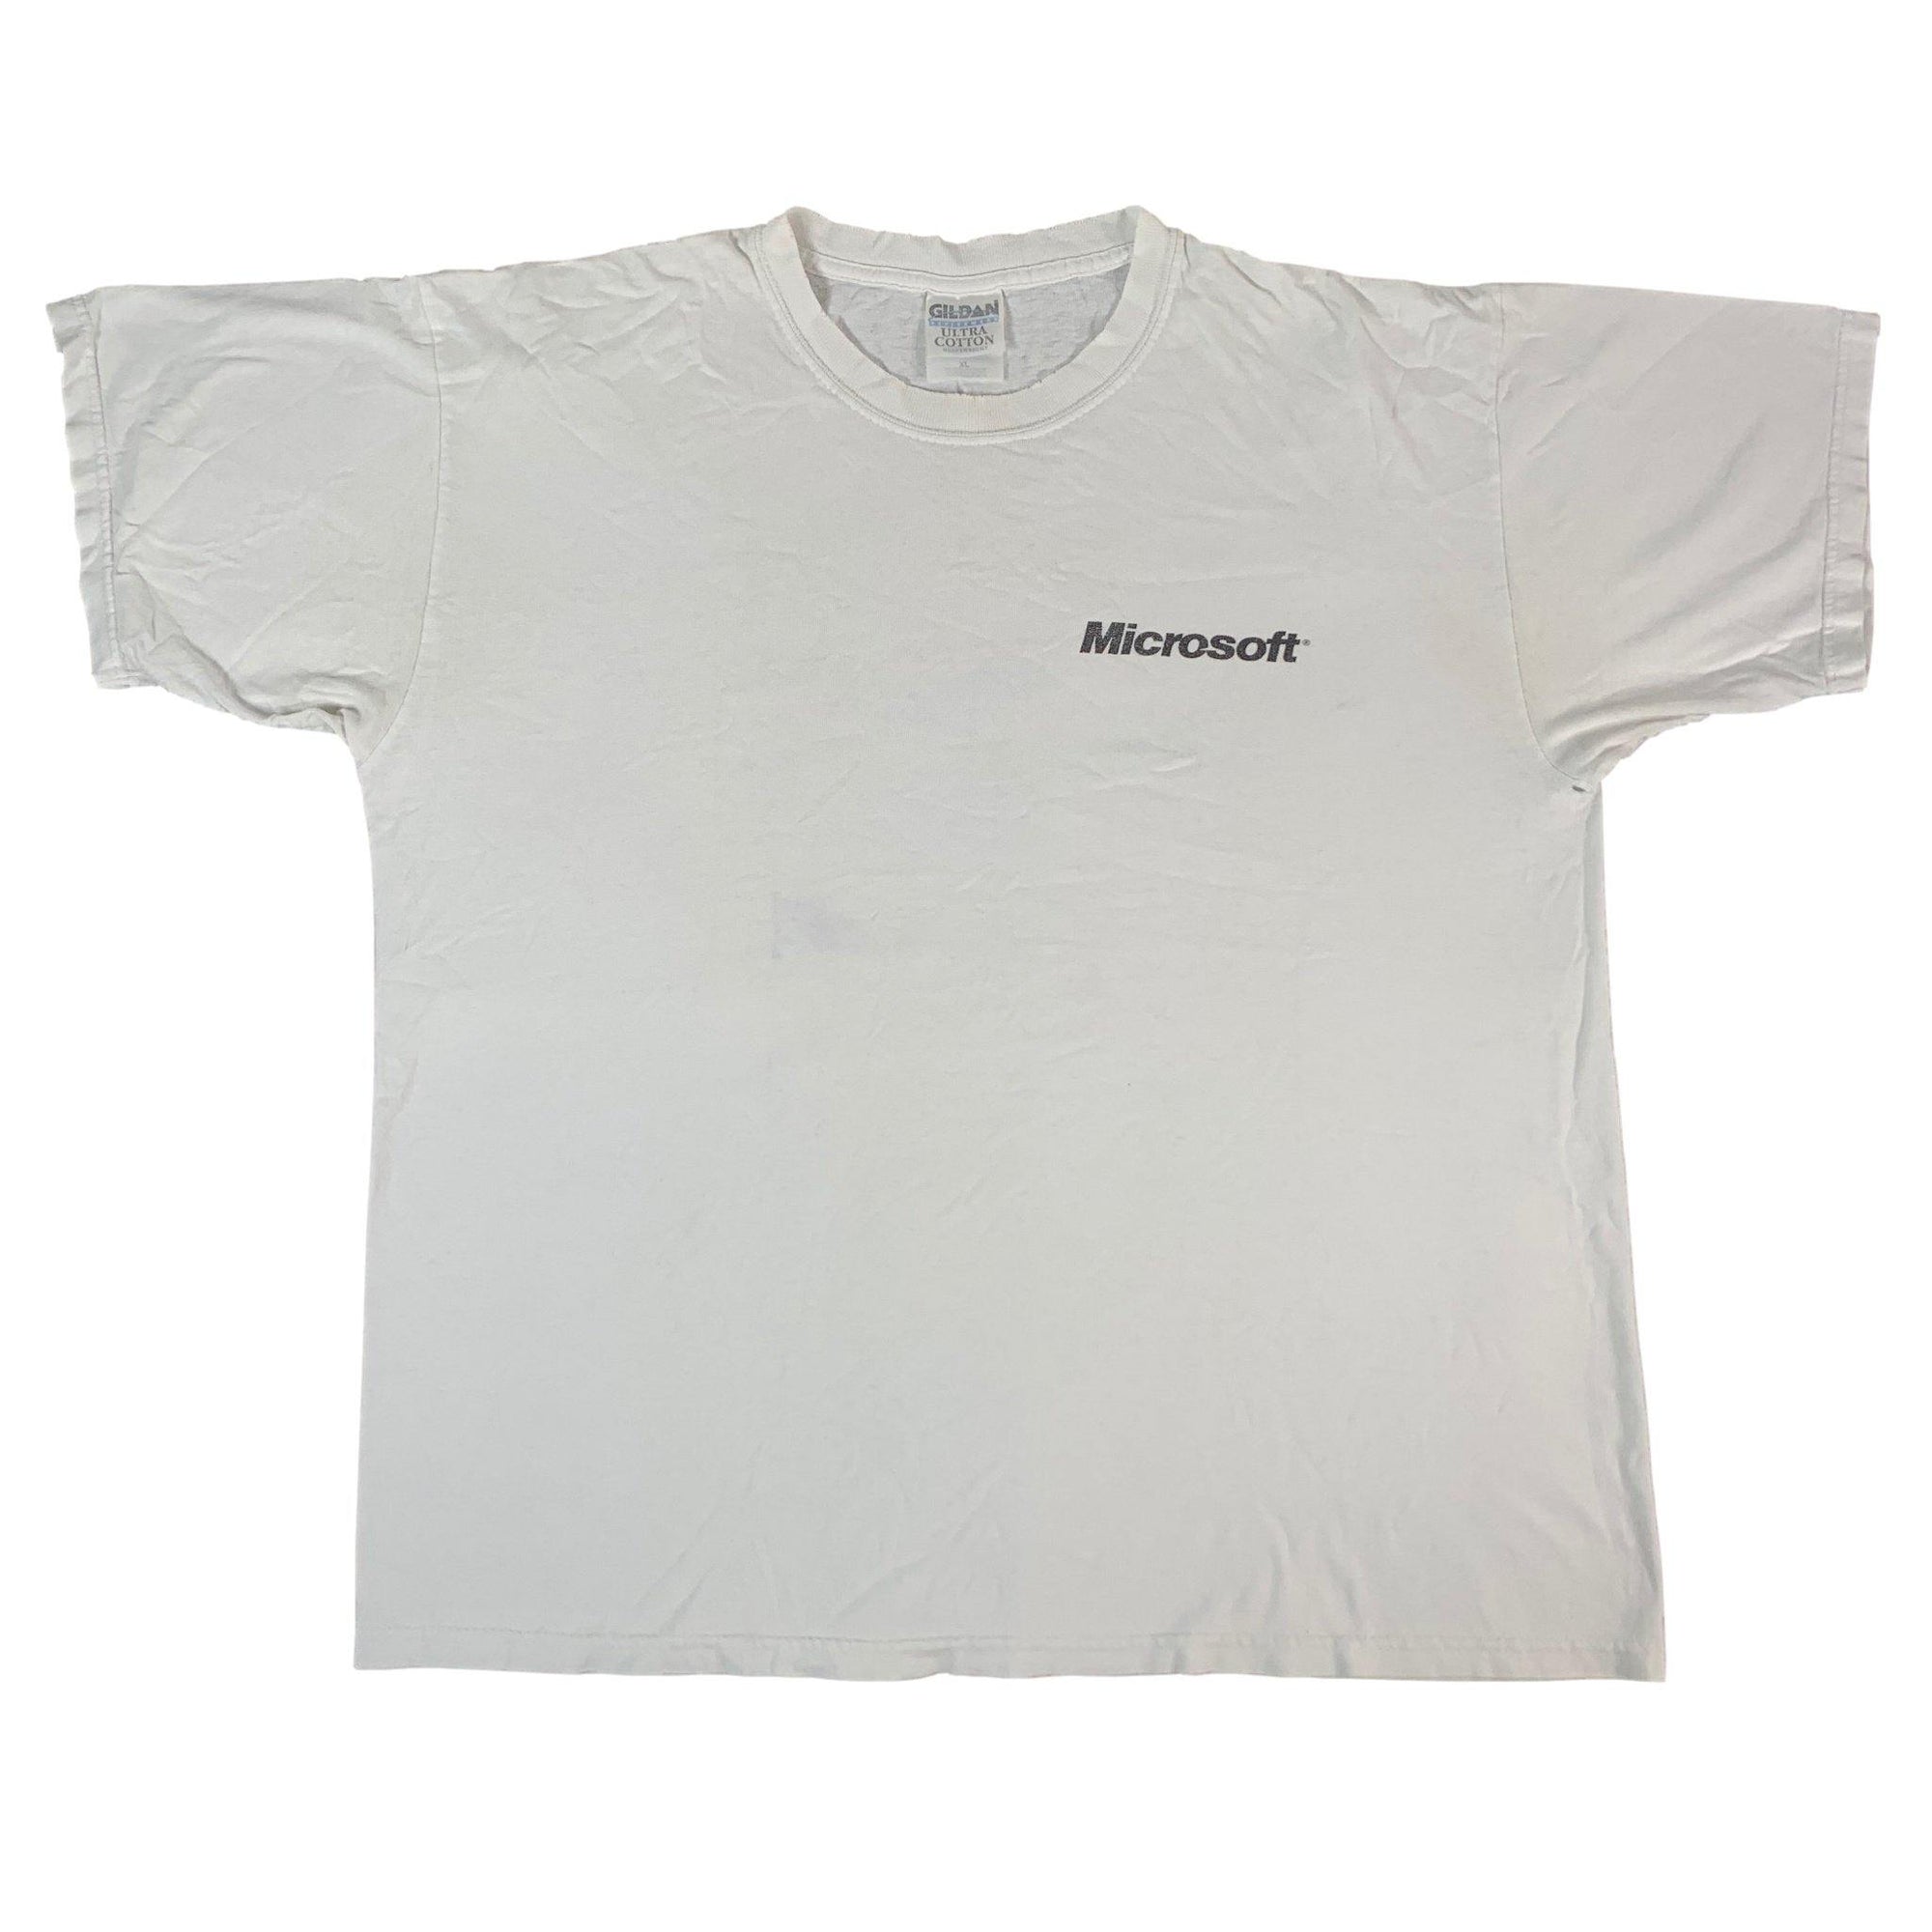 Vintage Microsoft "BackOffice" T-Shirt - jointcustodydc